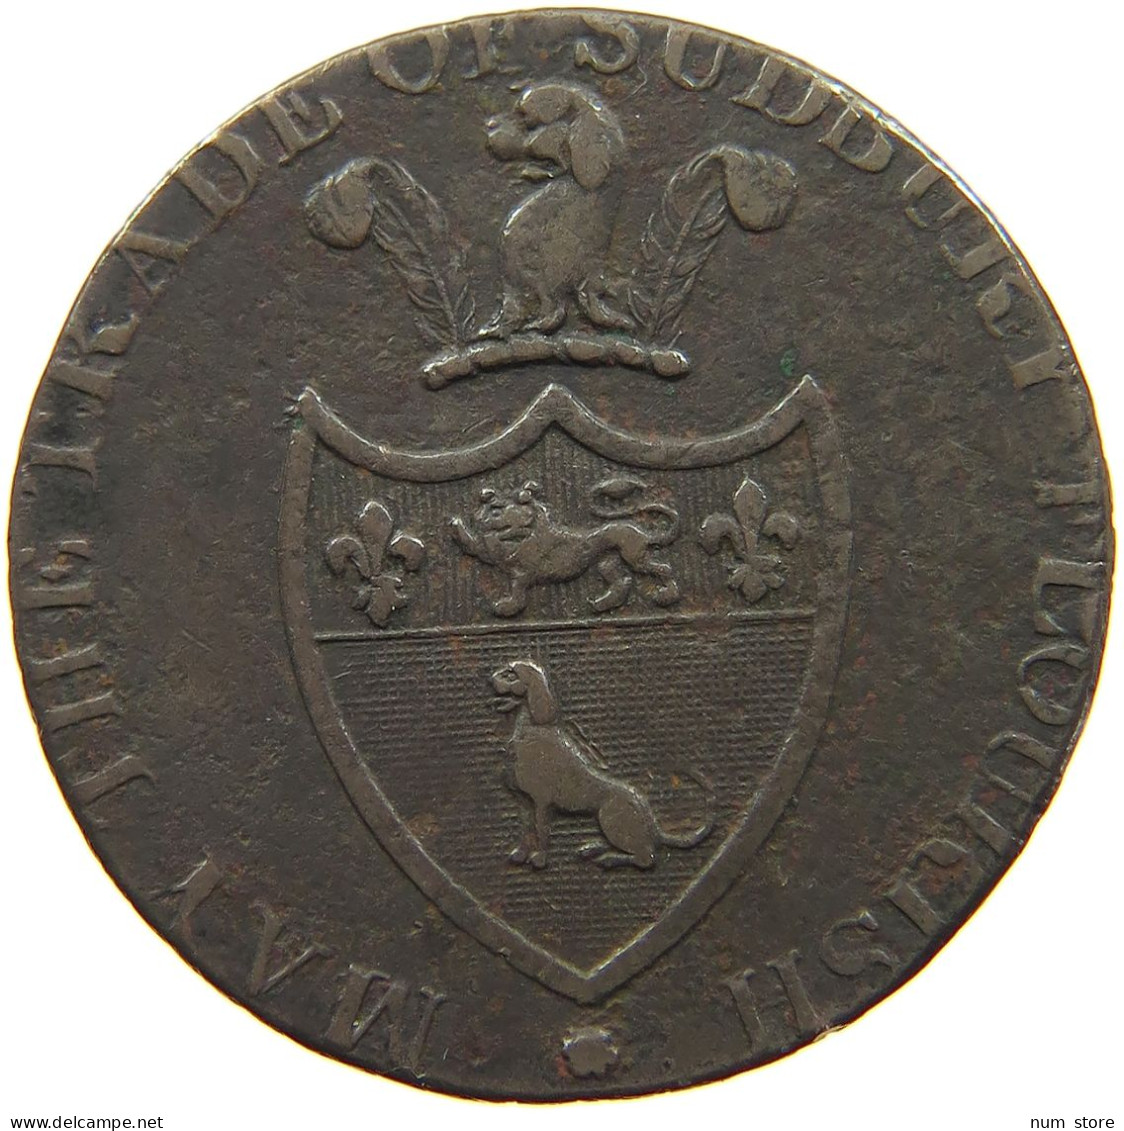 GREAT BRITAIN HALFPENNY 1793 GEORGE III. 1760-1820 PRO BONO PUBLICO #t161 0231 - B. 1/2 Penny